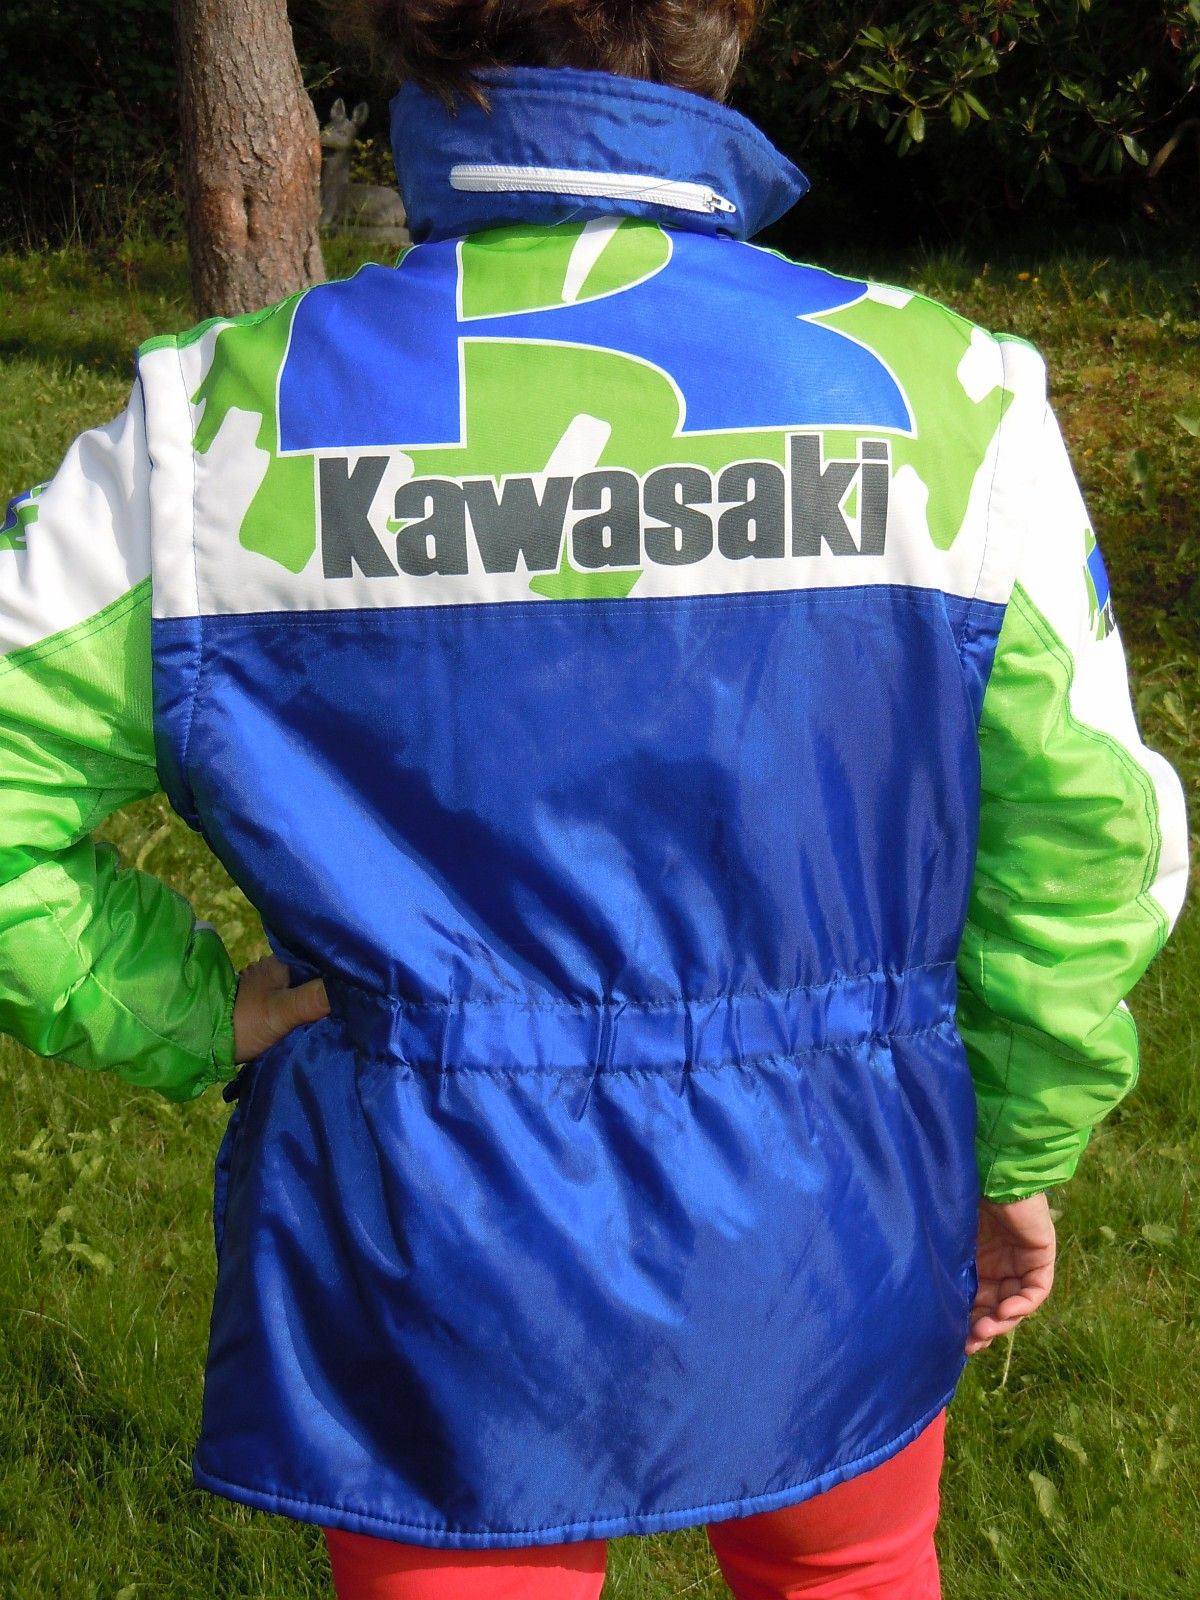 shuffle slogan Modsætte sig Kawasaki MC Jakke kr 1850 | FINN torget